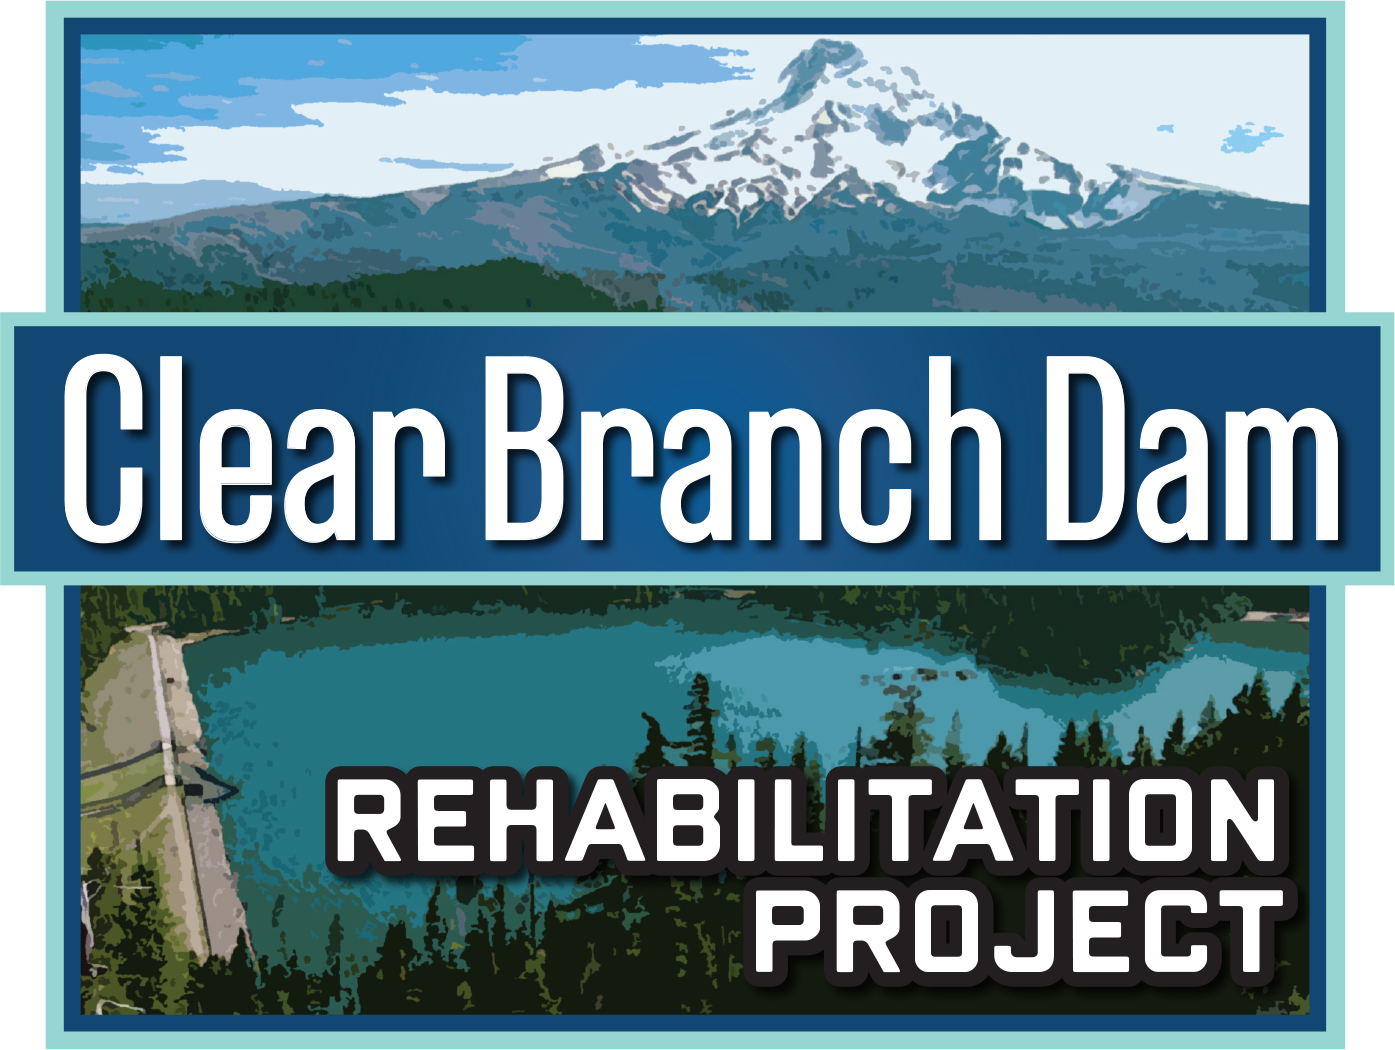 Clear Branch Dam Rehabilitation Project